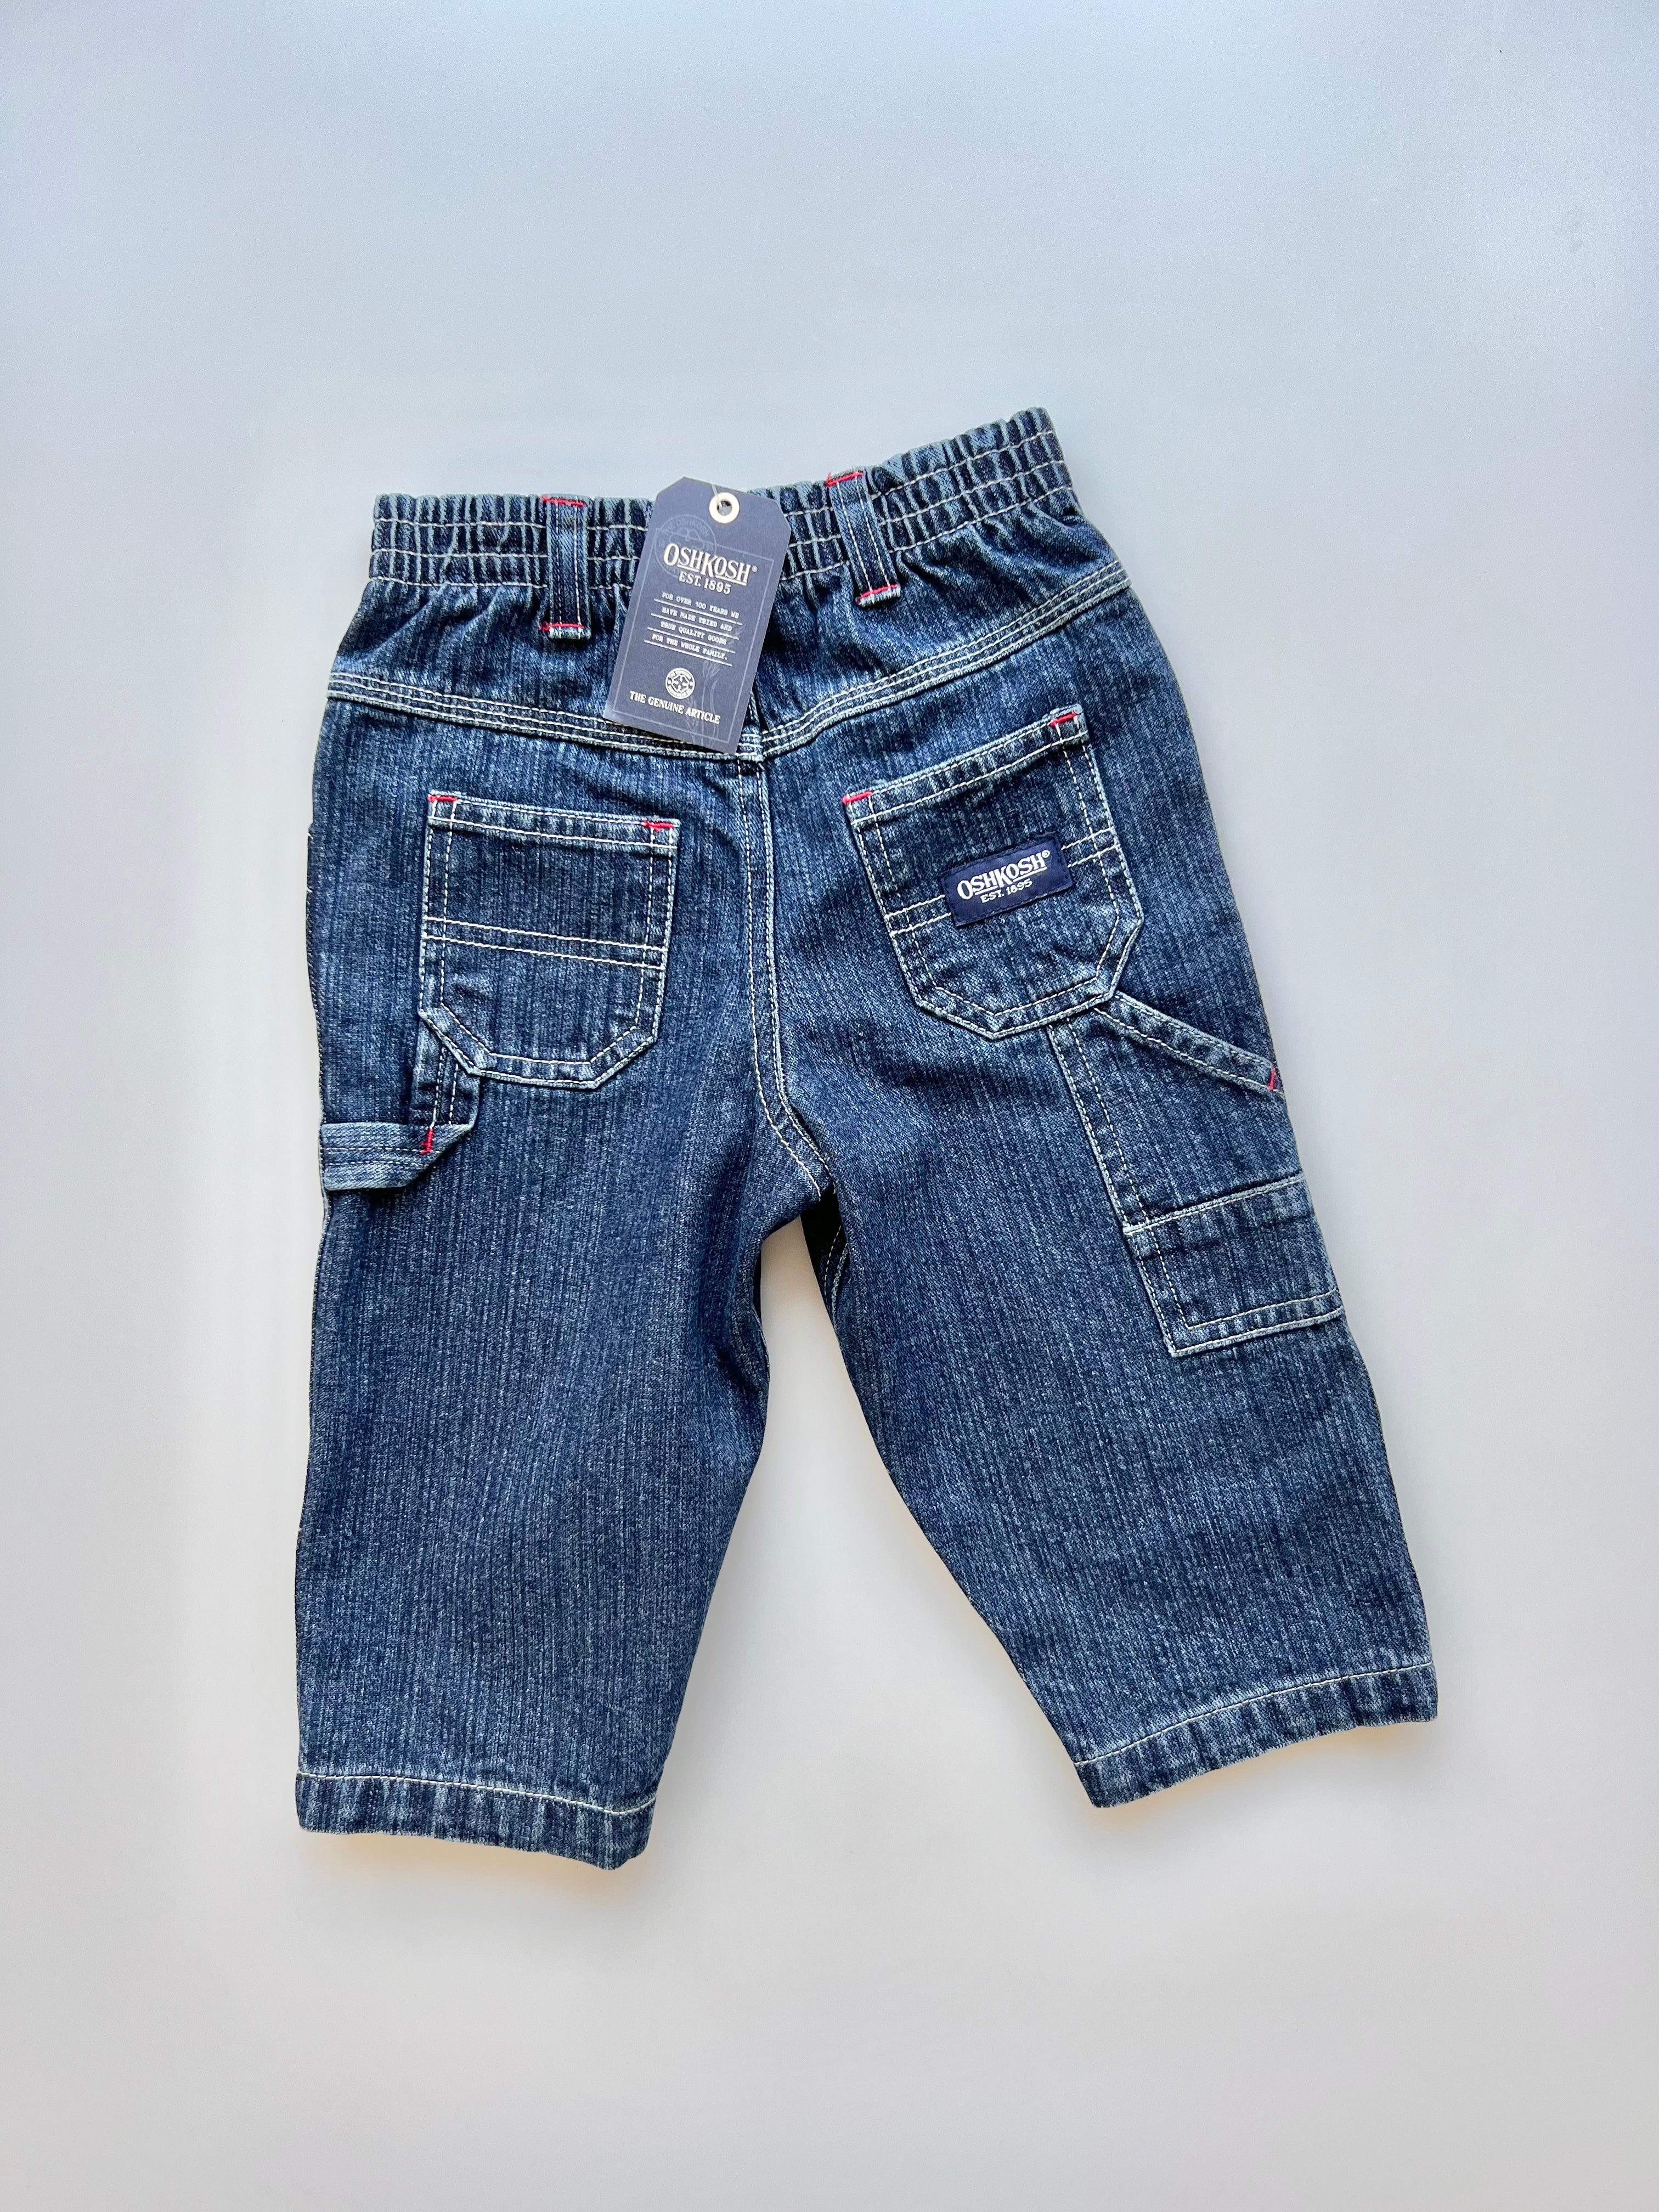 OshKosh B'gosh Carpenter Jeans 12 Months